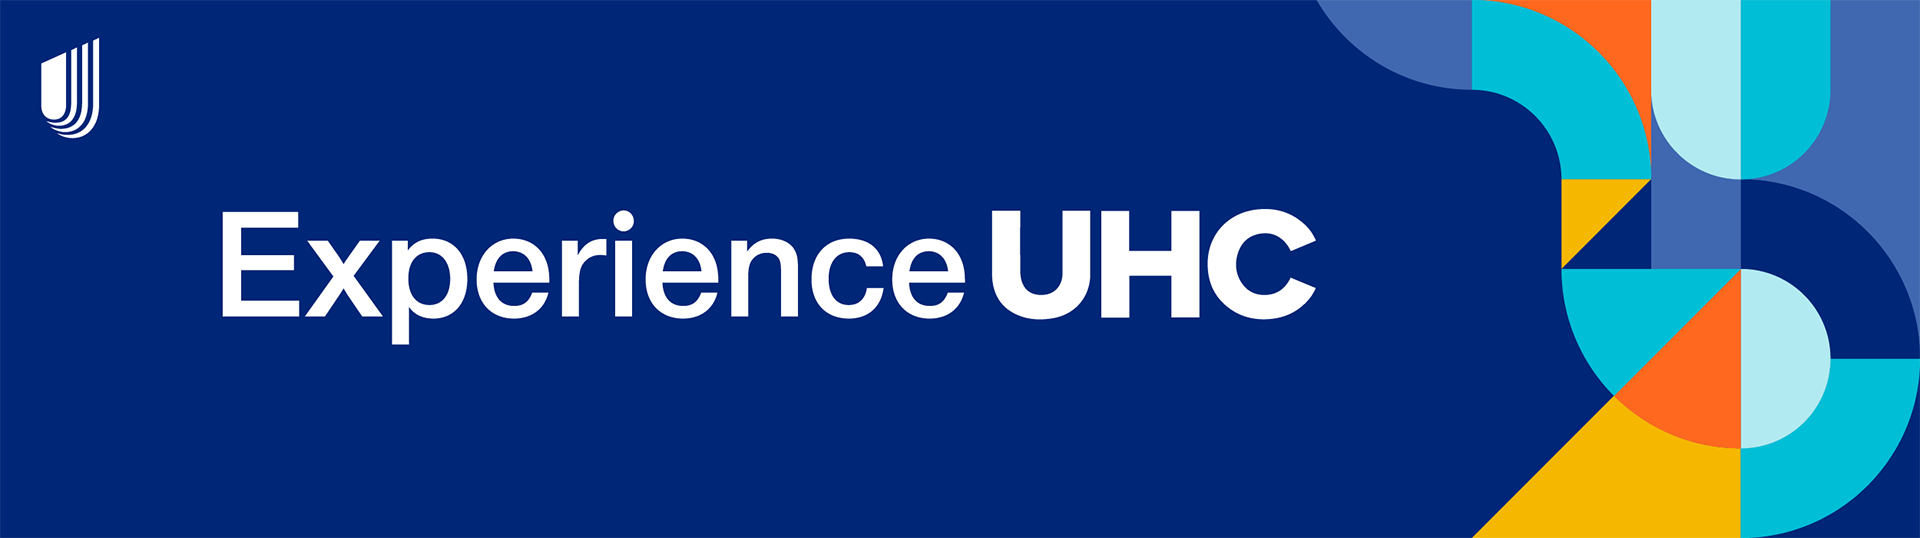 Experience UHC